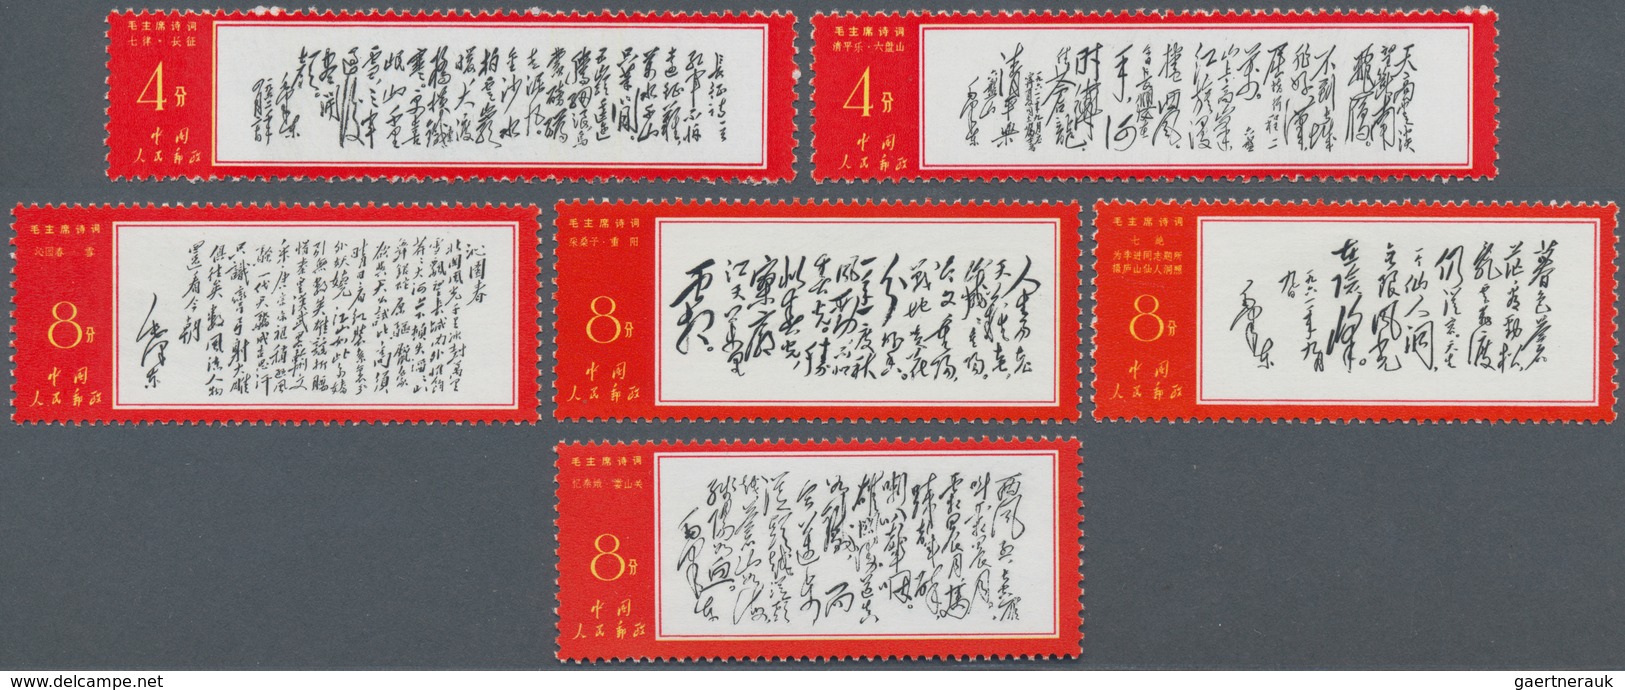 China - Volksrepublik: 1967/1968, Mao's Poems (W7) MNH. Michel Cat.value 6.000,- €. - Cartas & Documentos